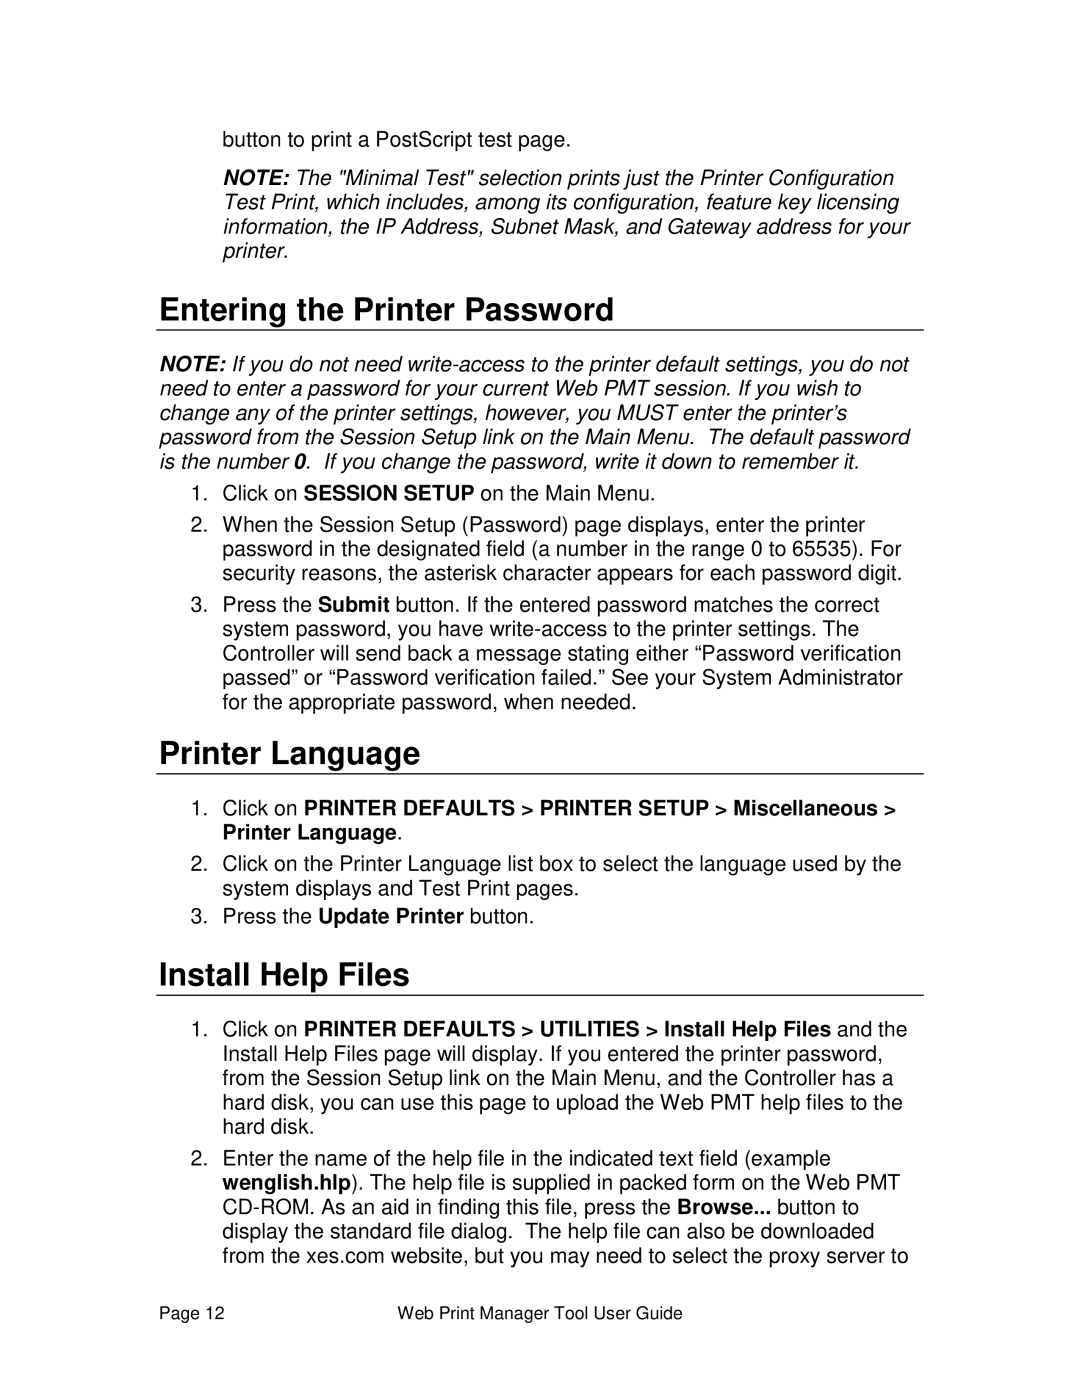 Xerox 701P39116 manual Entering the Printer Password, Printer Language, Install Help Files 